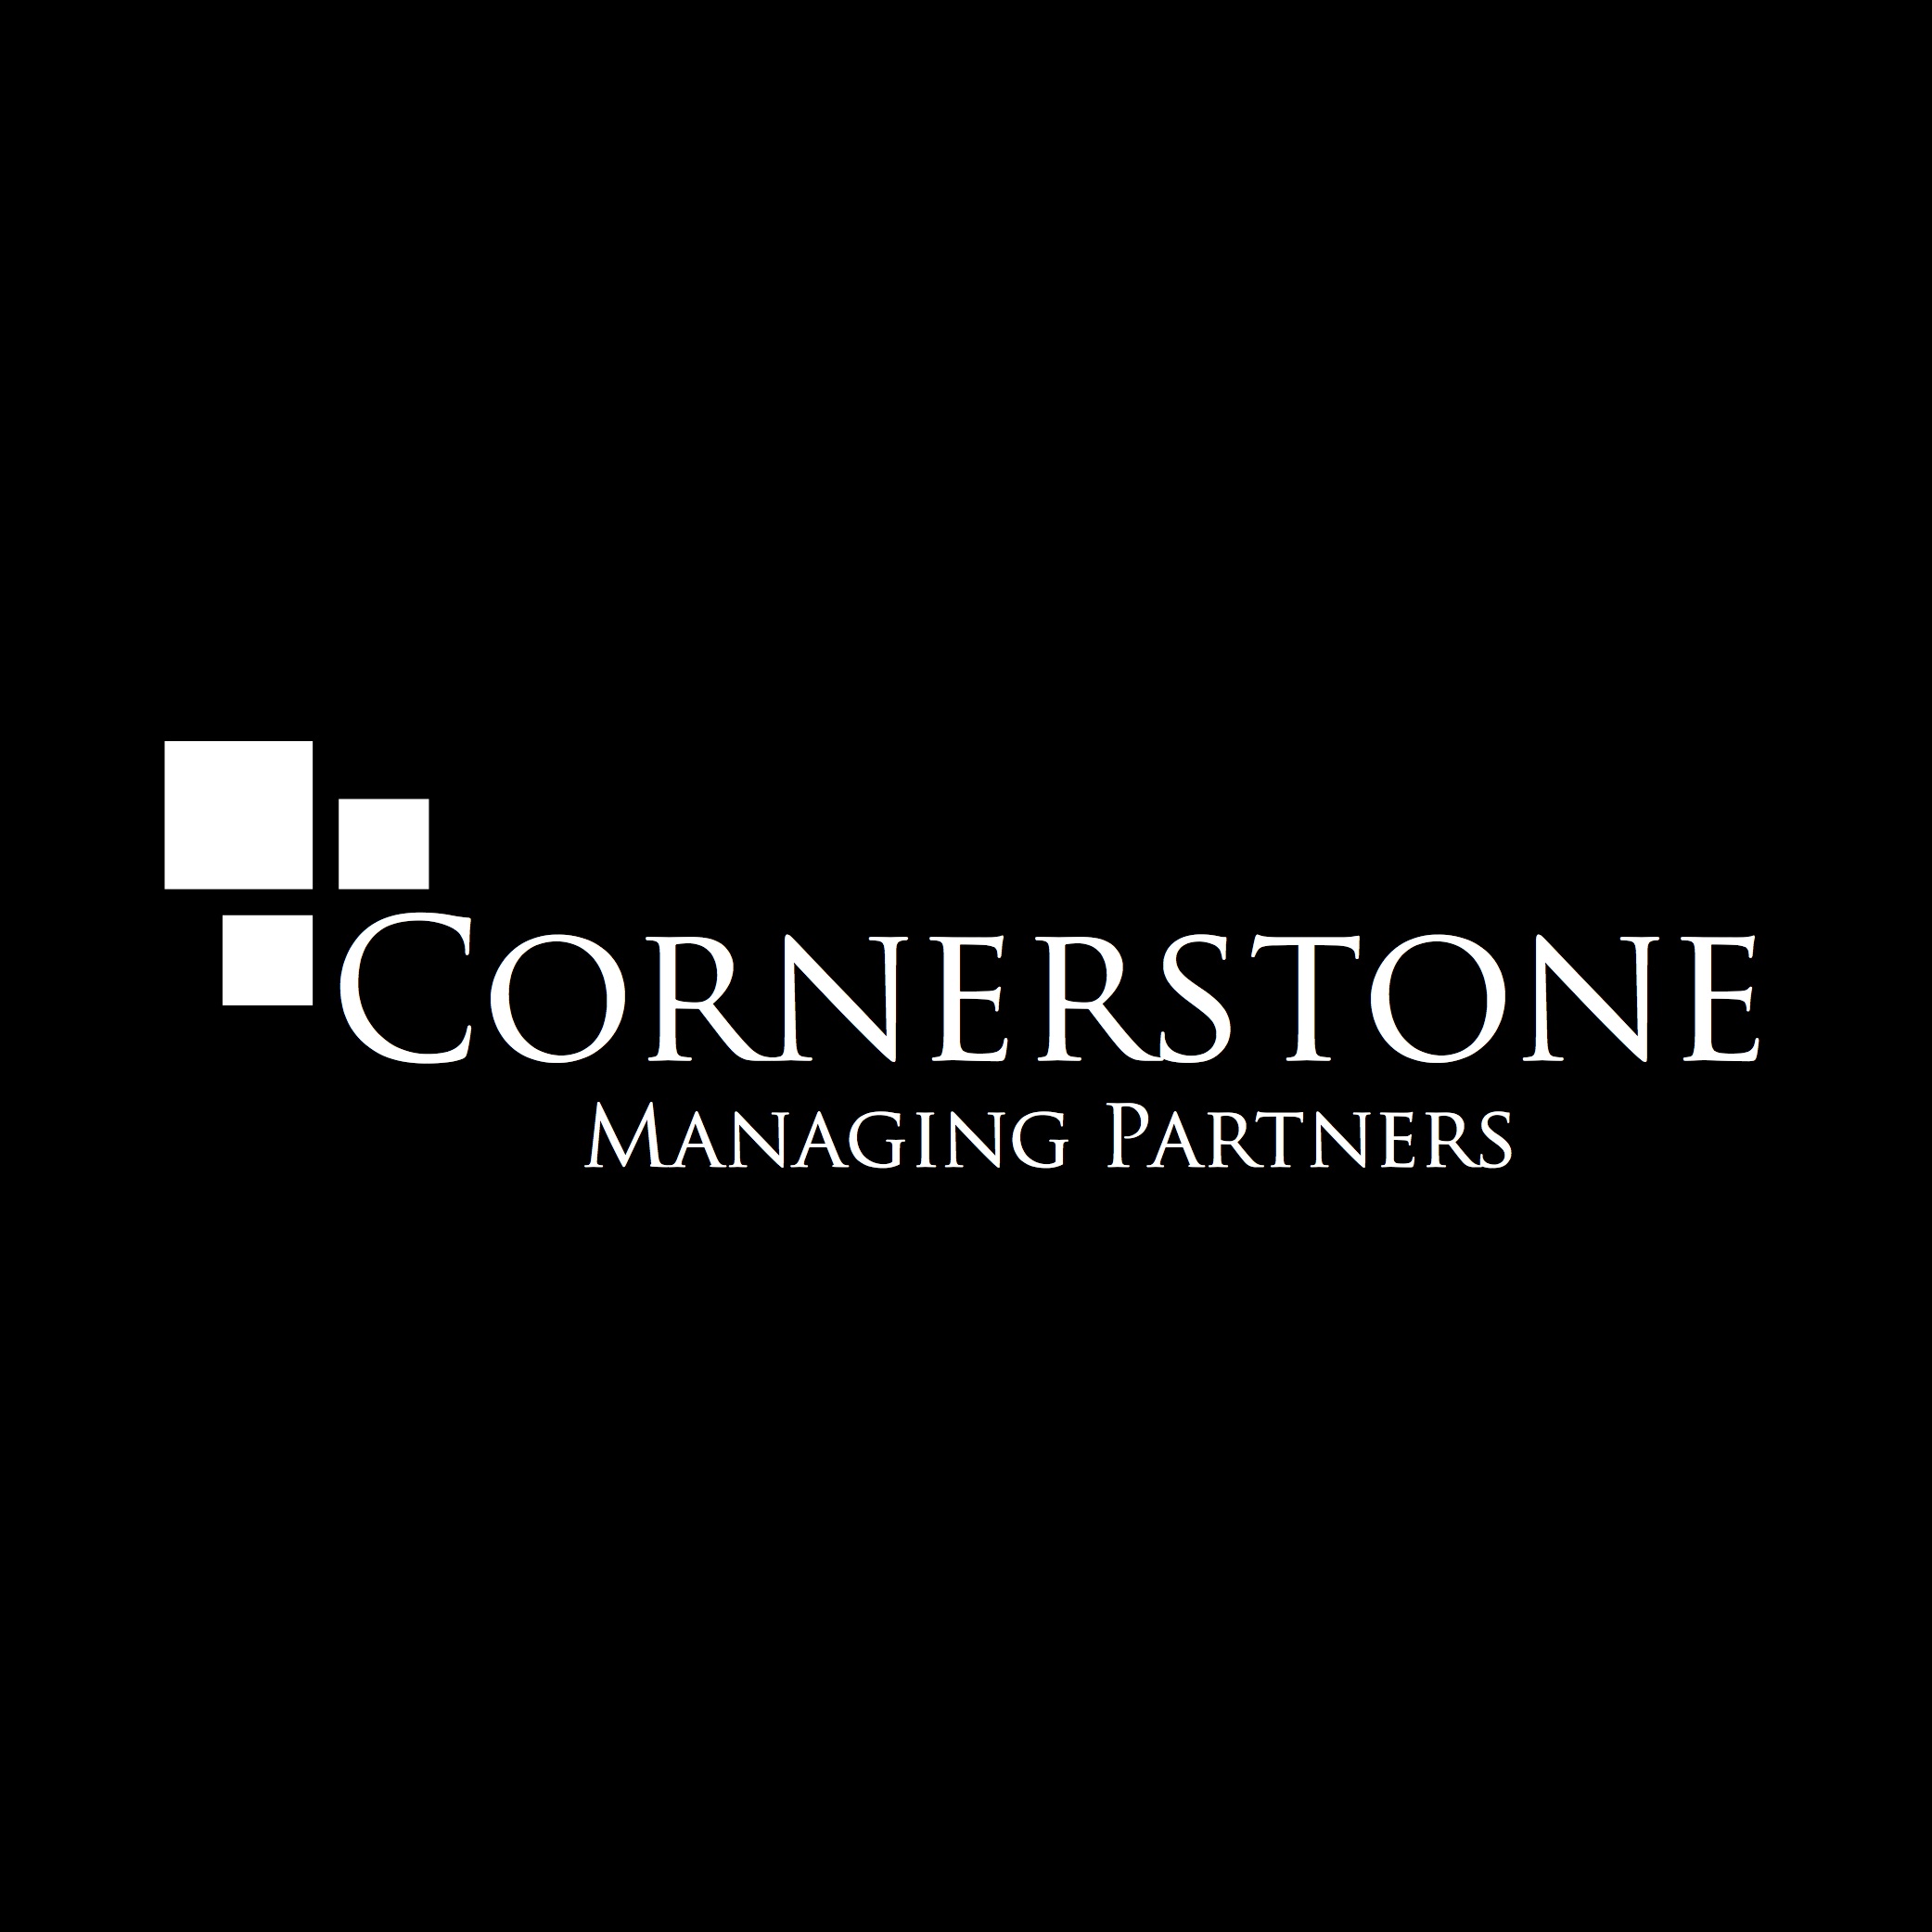 Cornerstone Managing Partners